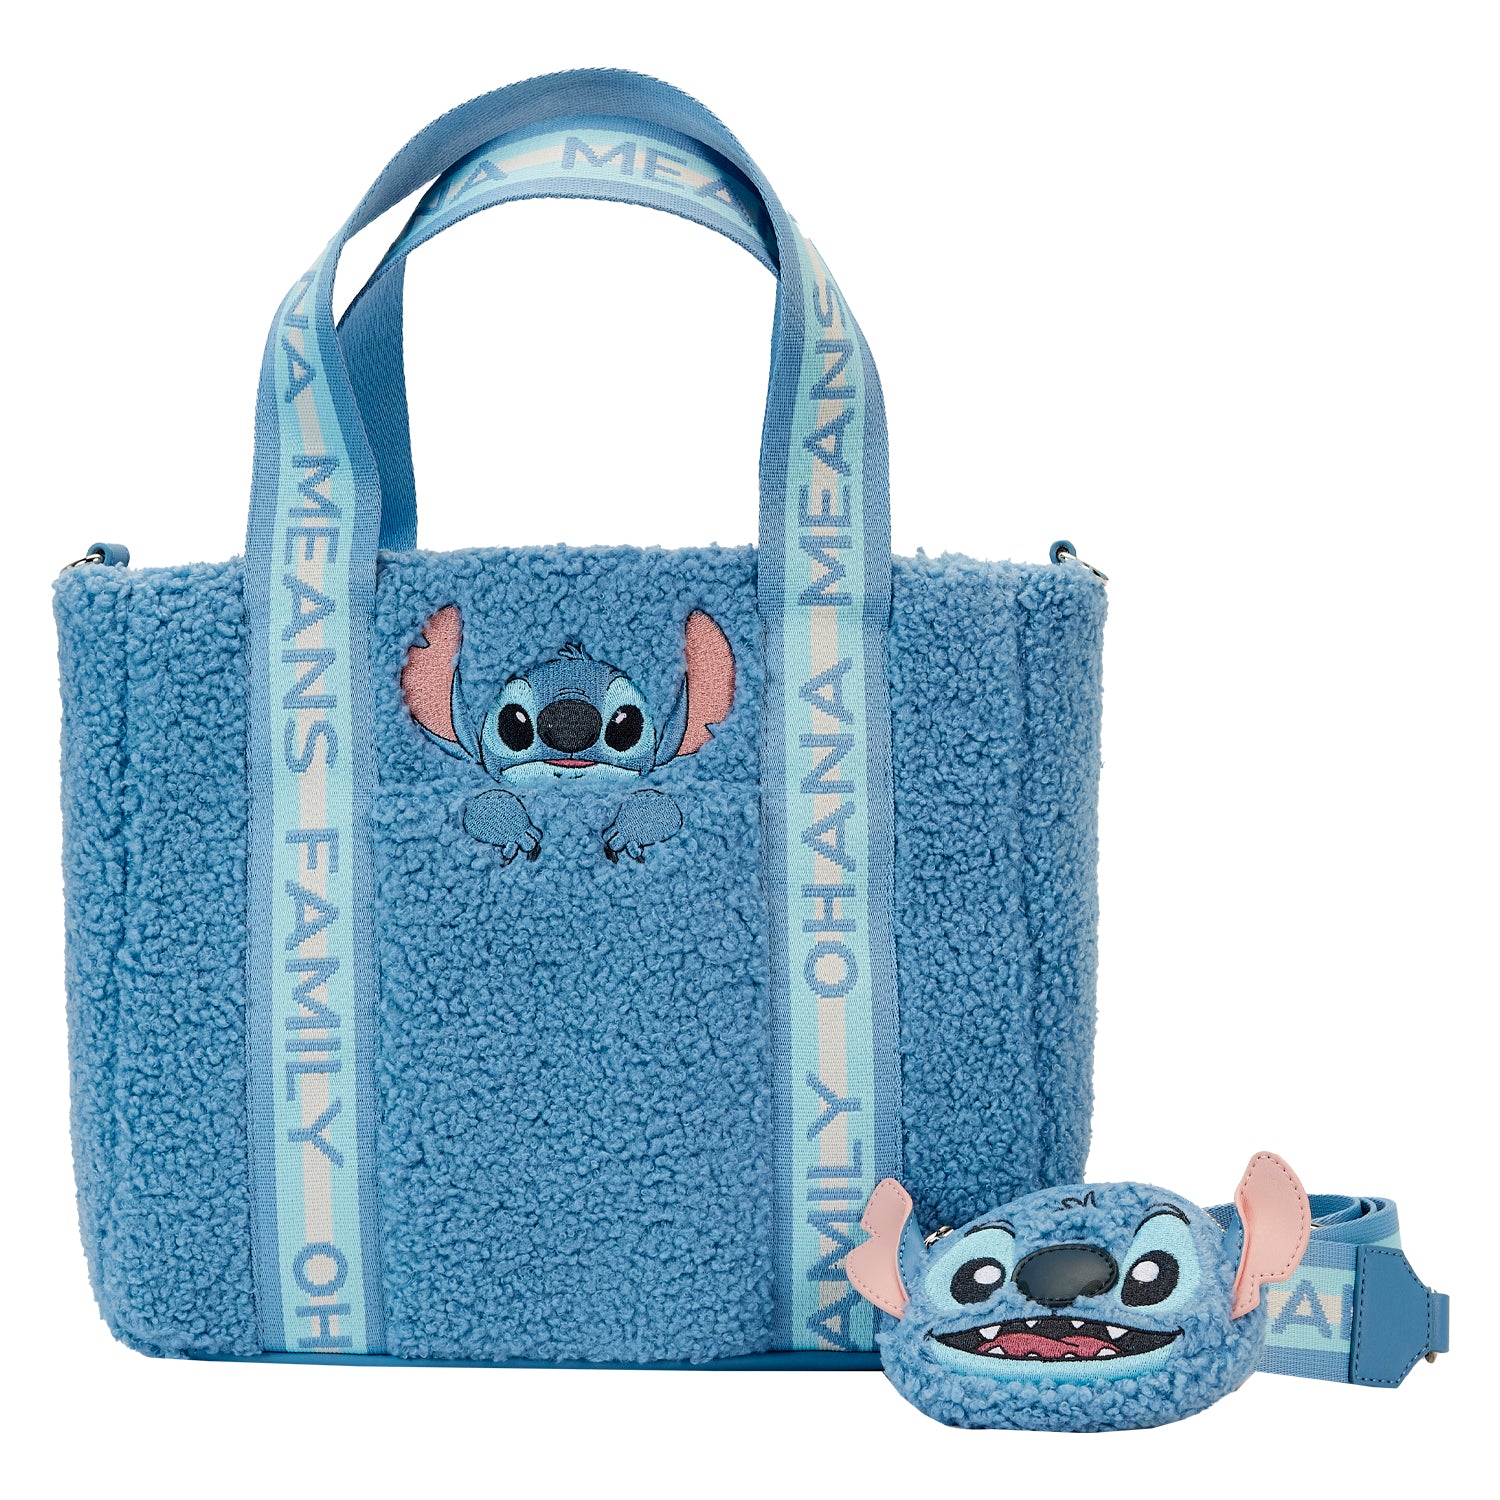 Disney Lilo and Stitch Handbag - Girls, Boys, Teens, Adults - Officially Licensed Stitch Faux Leather Cosplay Mini Crossbody Handbag